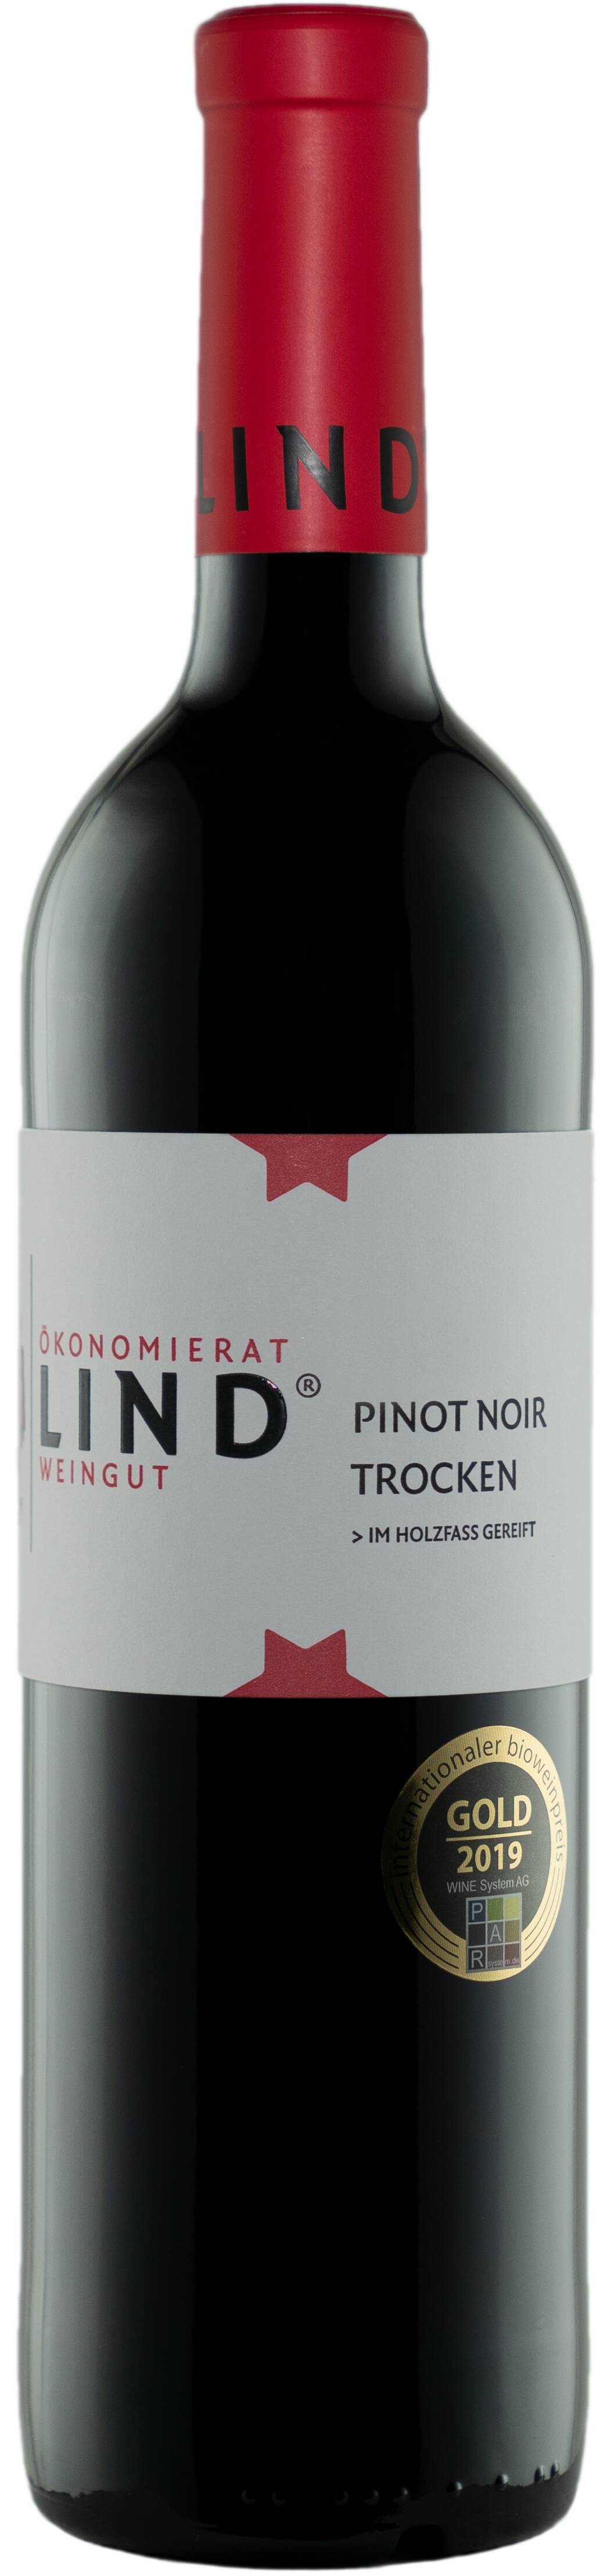 Pinot Noir trocken  2020